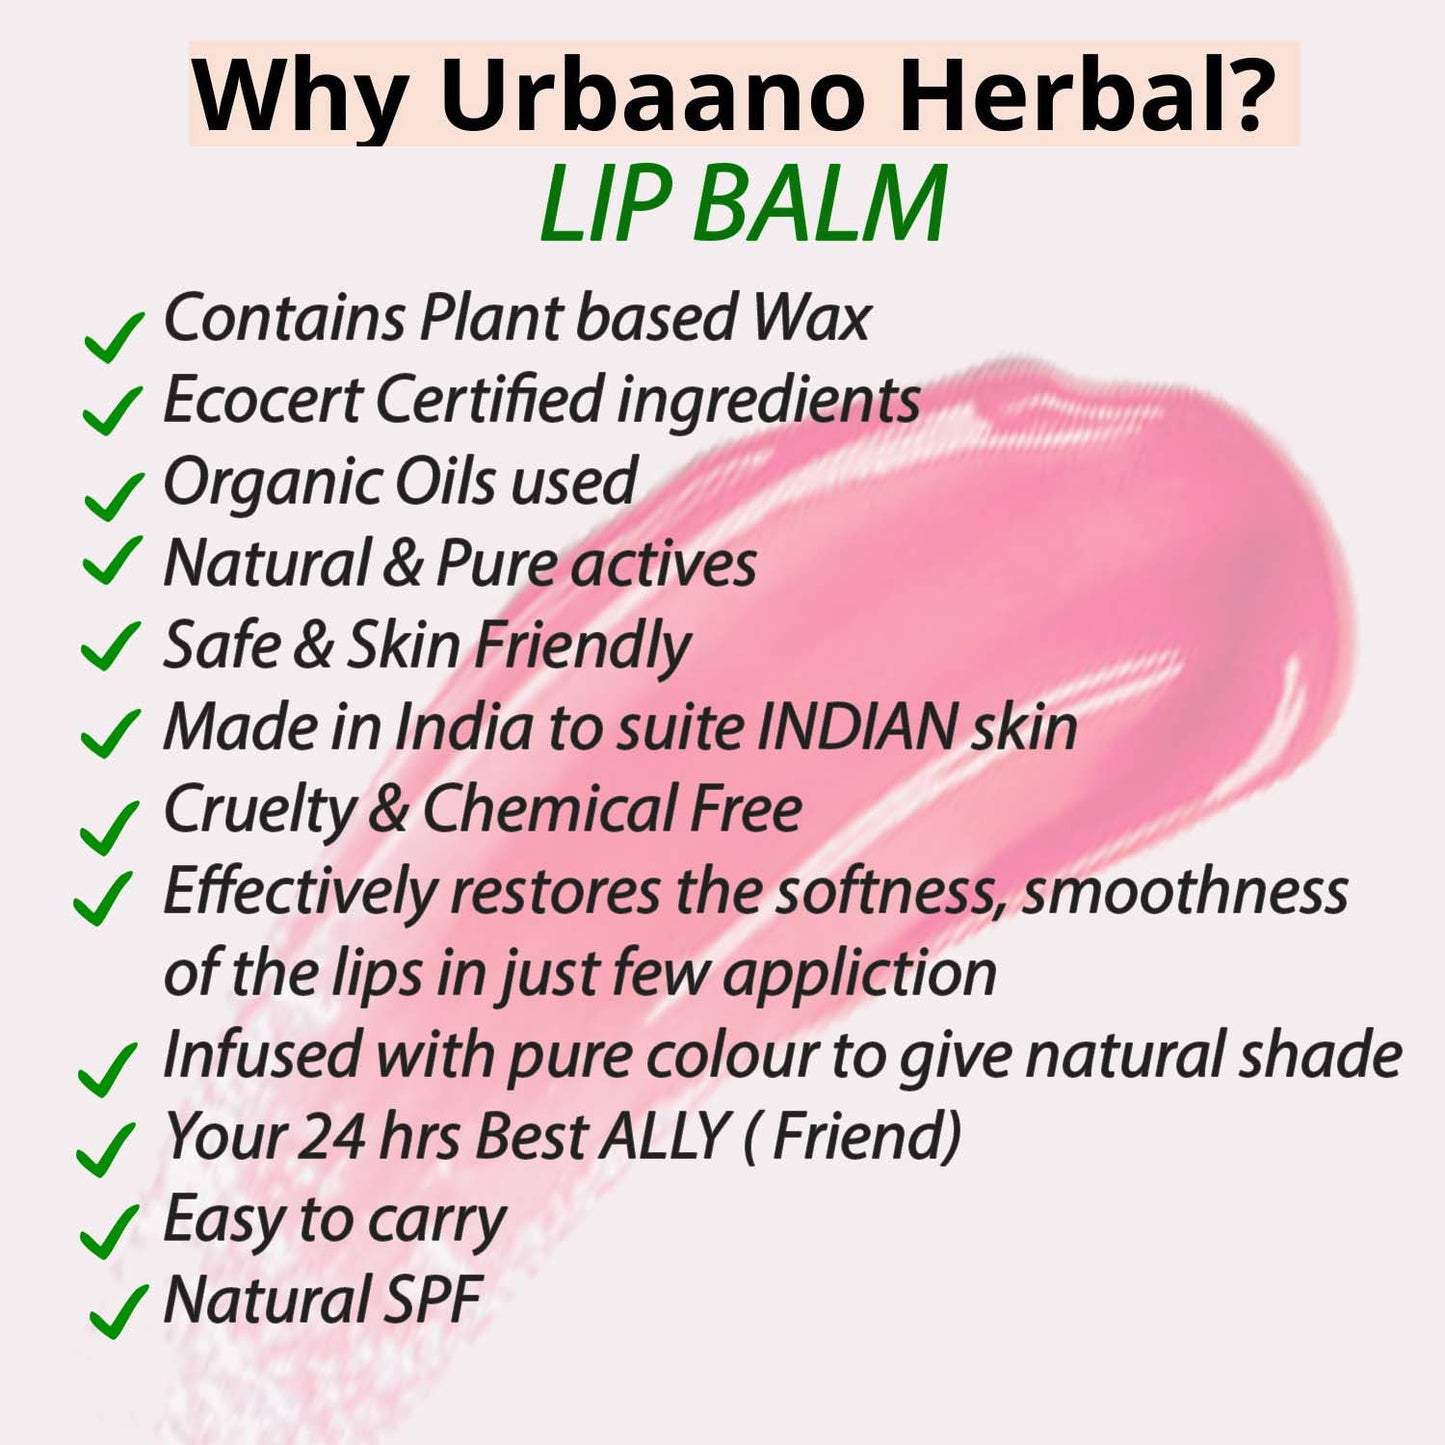 Strawberry Tinted Lip & Cheek Balm & Natural Lip Oil, Serum Combo 100% Natural  Ultra Moisturization